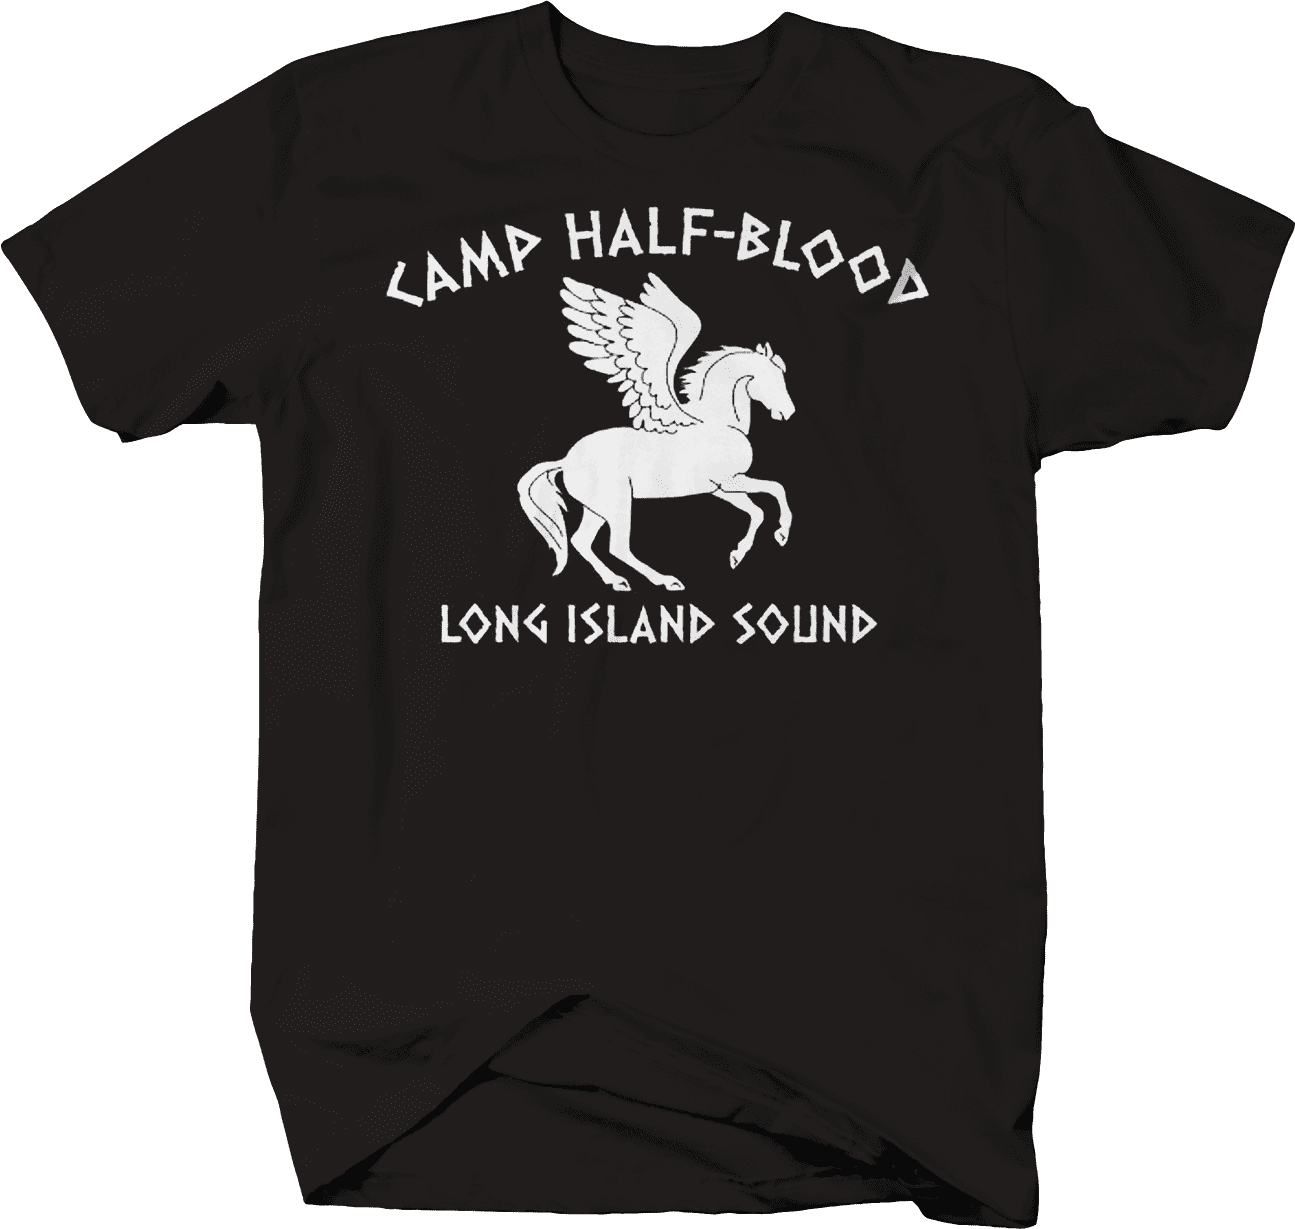 camp half blood T-Shirt for men Adult Unisex shirt Medium Black